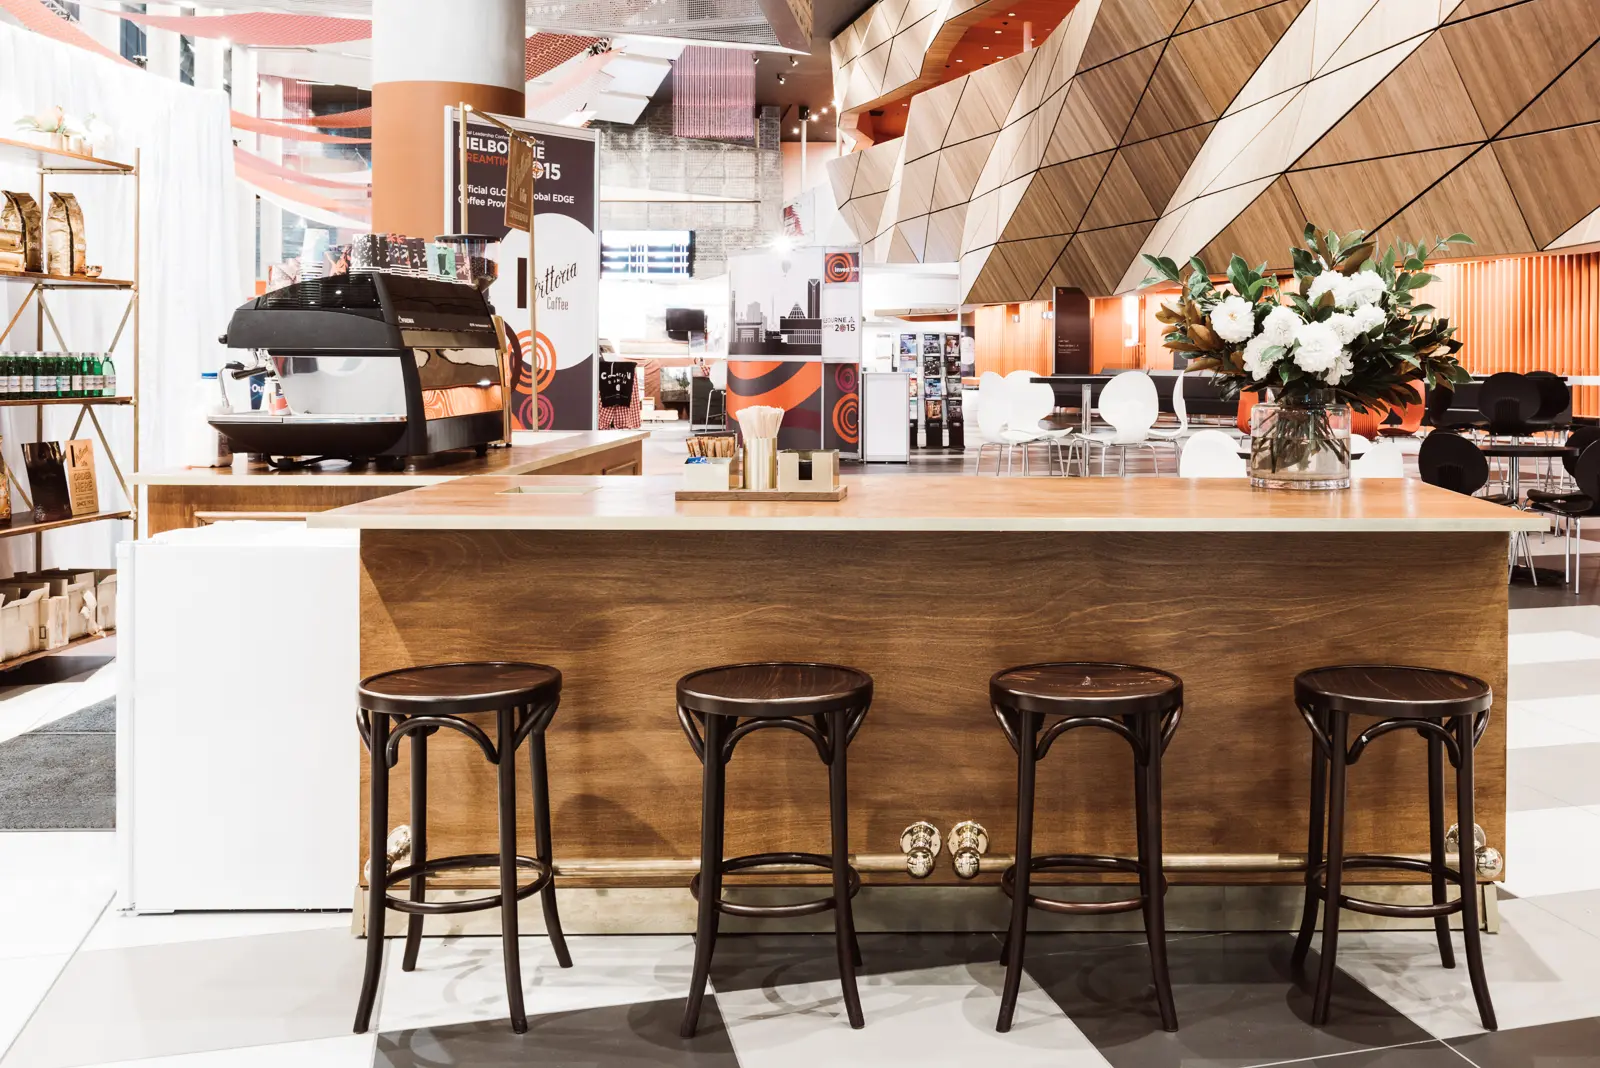 Vittoria Coffee Cart - retail activation, build - Melbourne, Australia